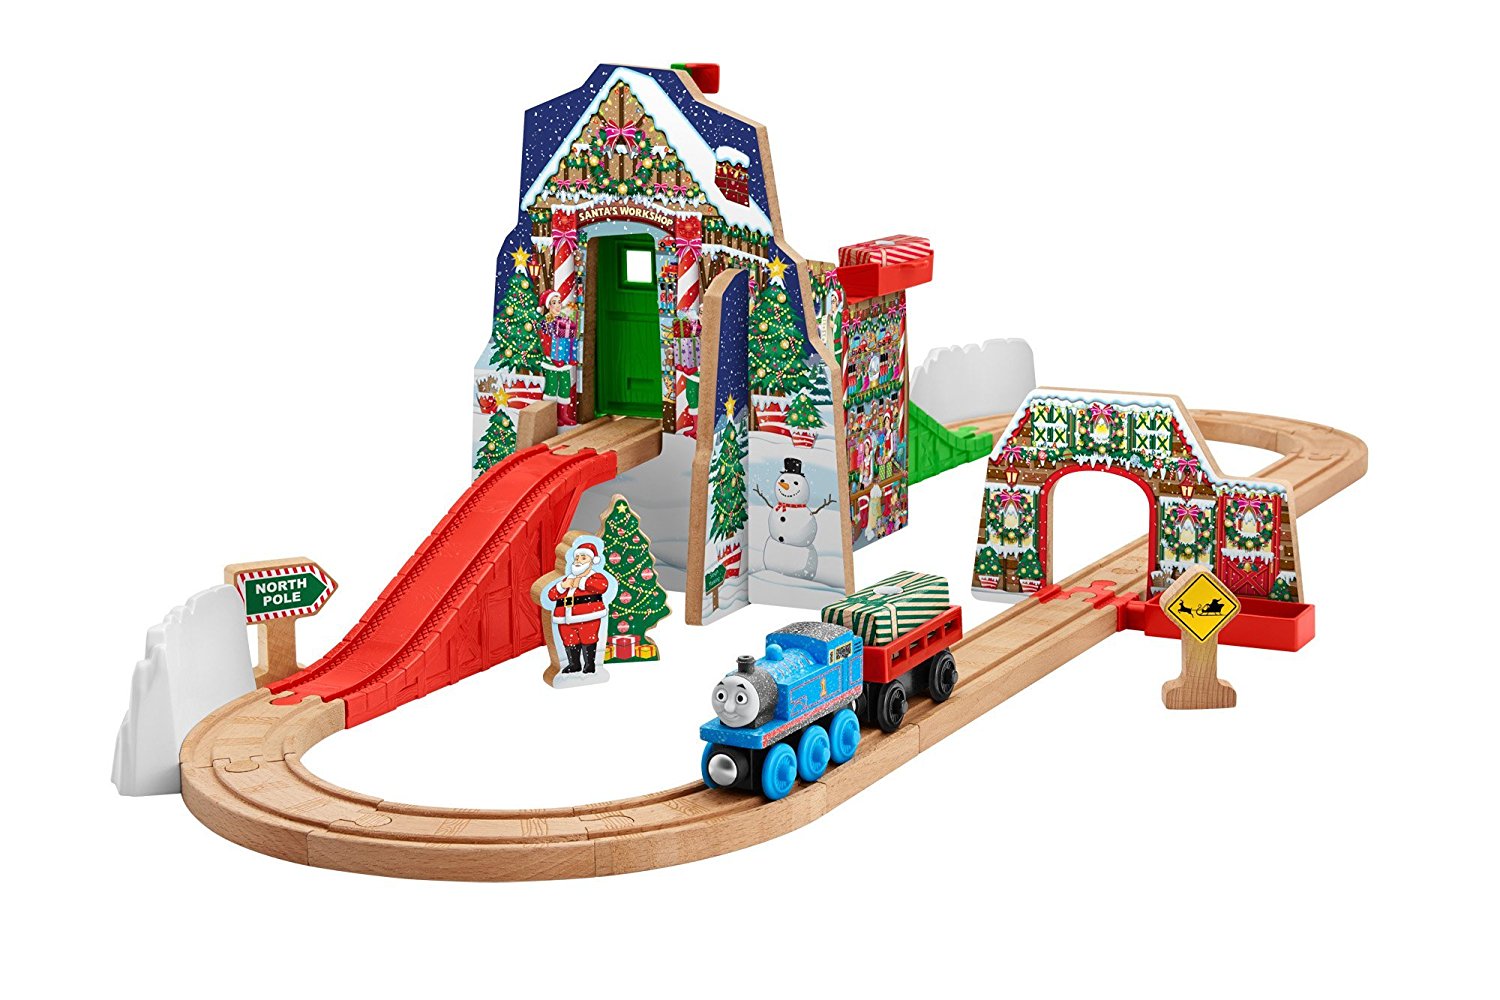 HUGE Price Drop! Thomas the Train Wooden Railway Santa’s Workshop Express – Just $24.70!